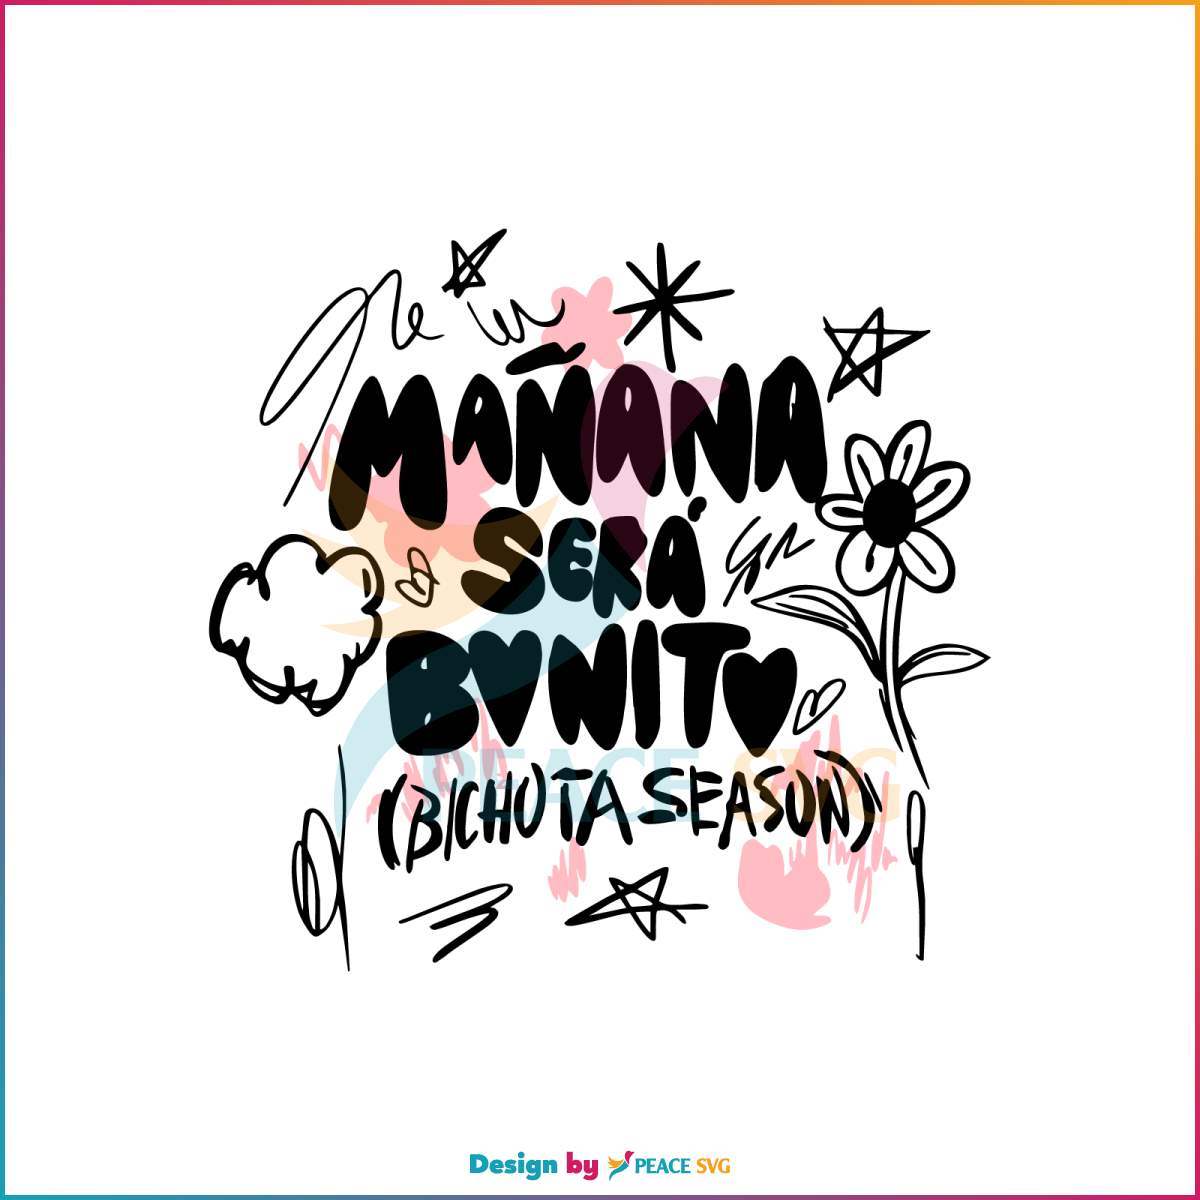 manana-sera-bonito-bichota-season-svg-graphic-design-file